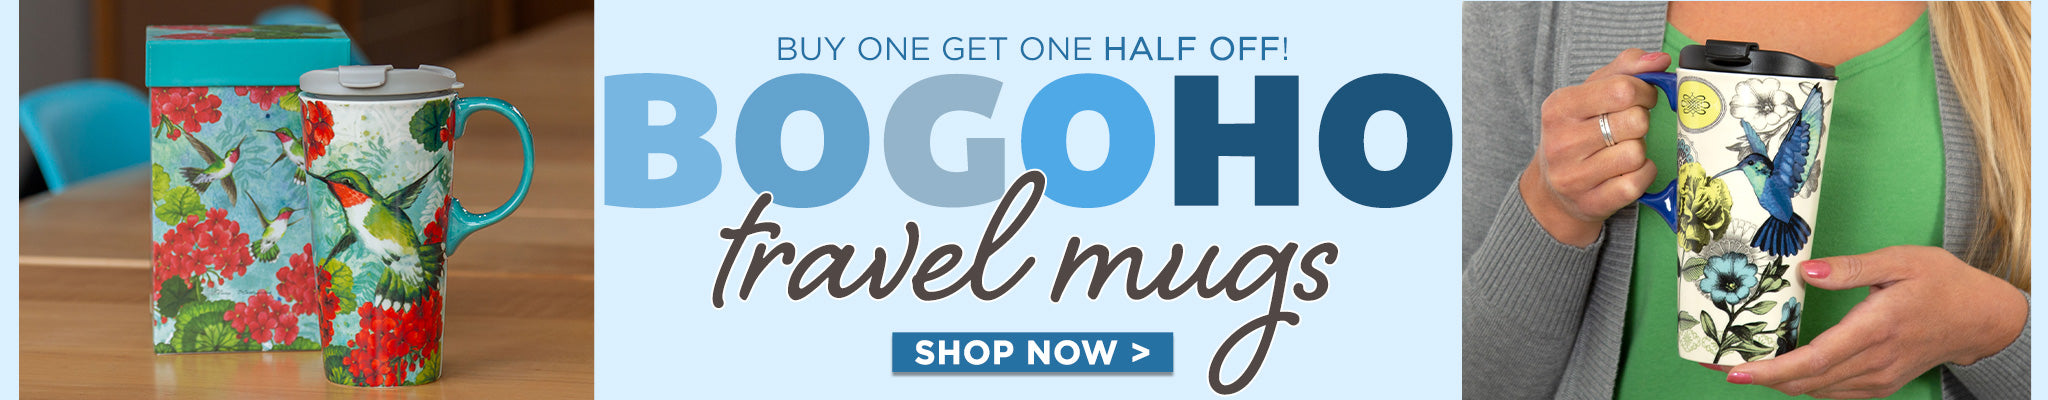 Buy 1, Get 1 Half Off on select Travel Mugs!